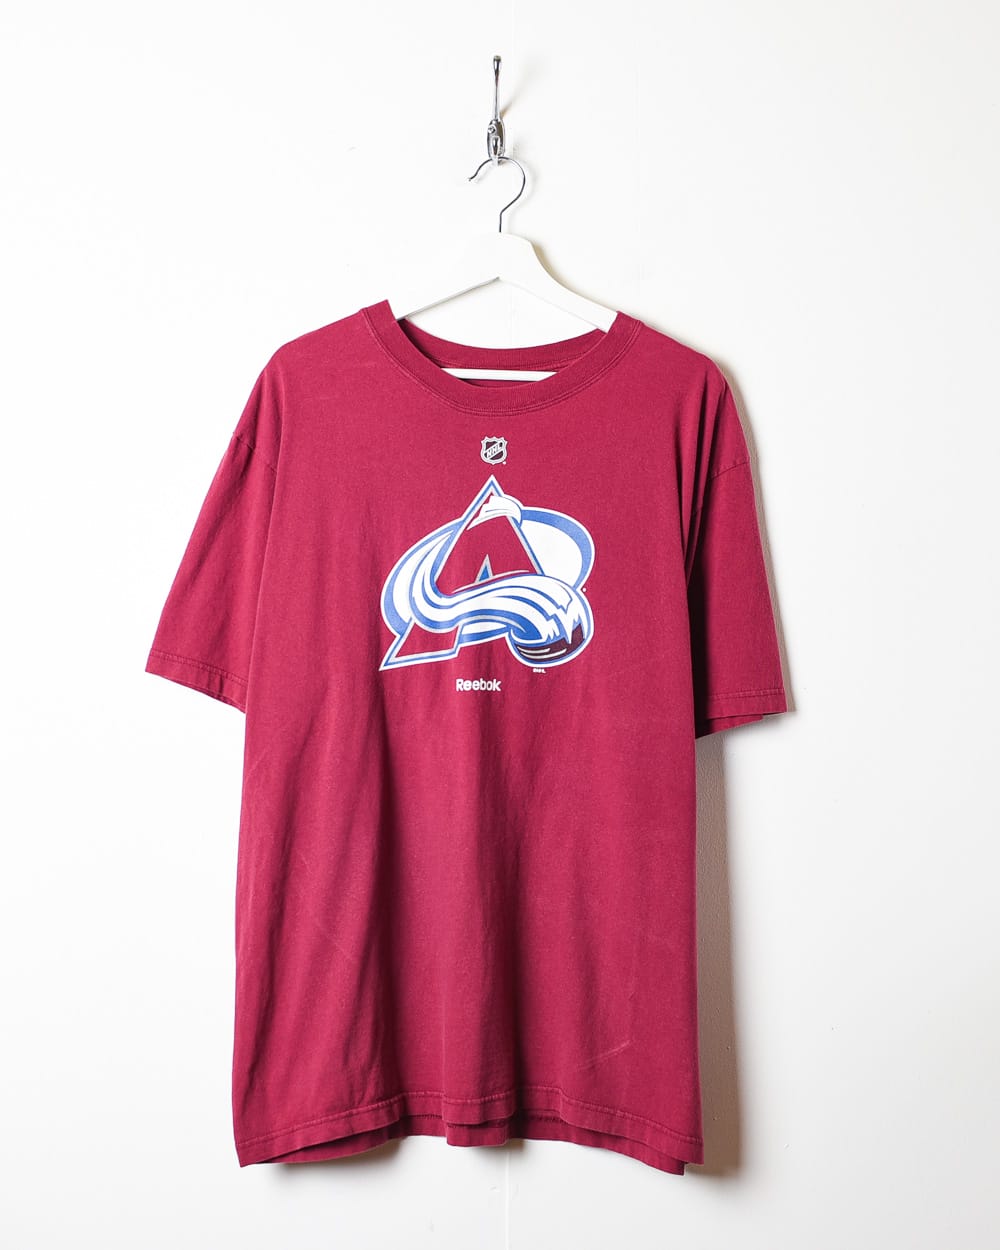 Vintage 90s Colorado Avalanche Hockey Looney Tunes Shirt Unisex